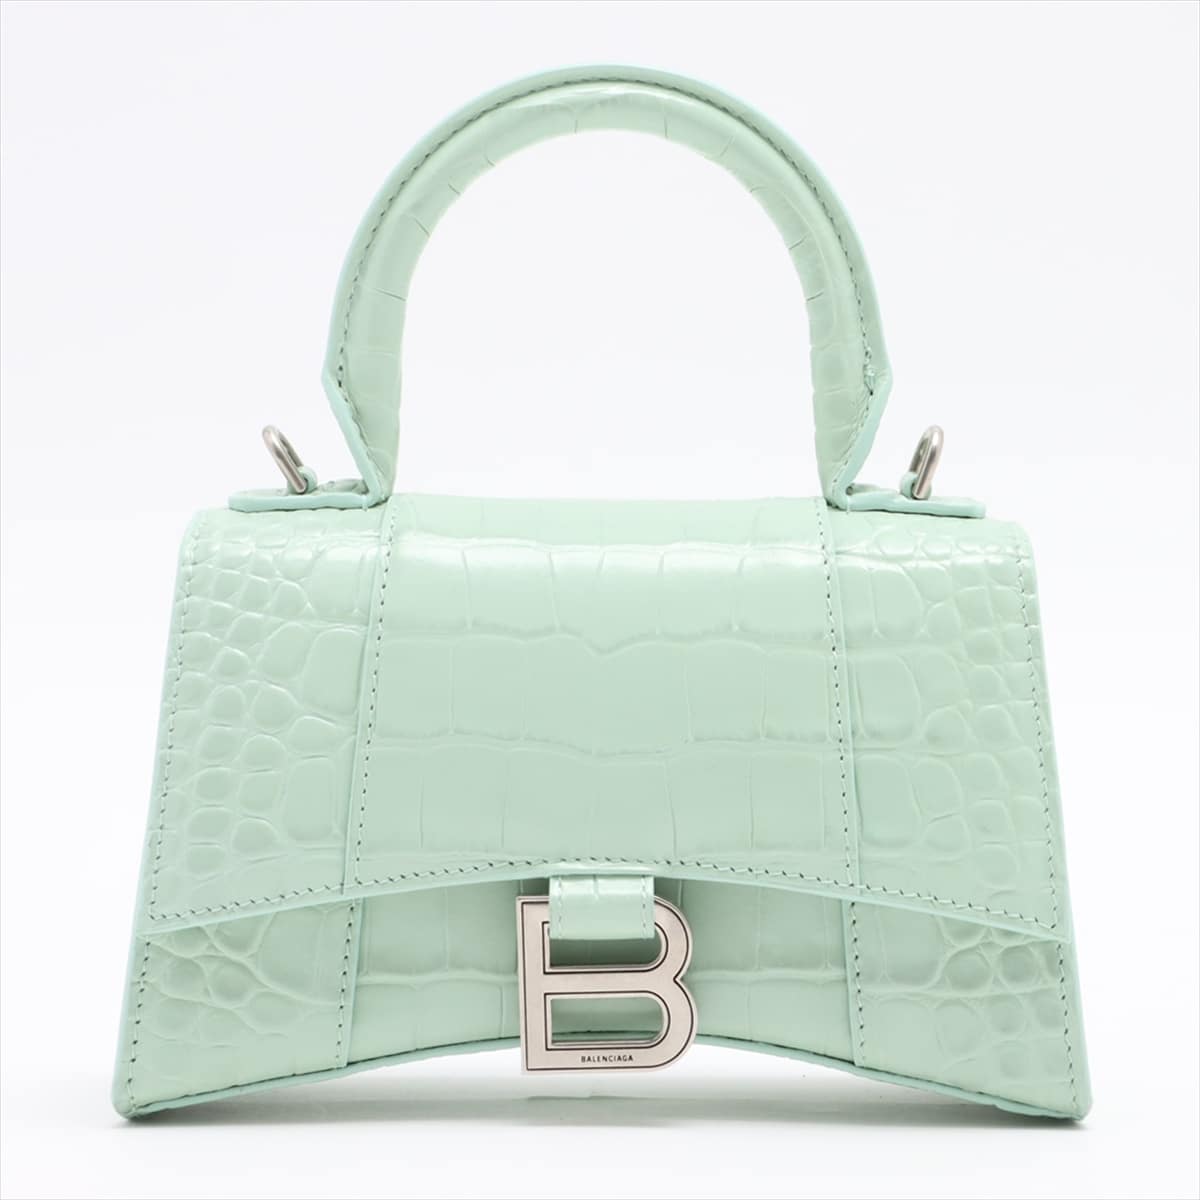 Balenciaga Hour glass XS Moc croc 2way shoulder bag Green 592833 Straps are distorted